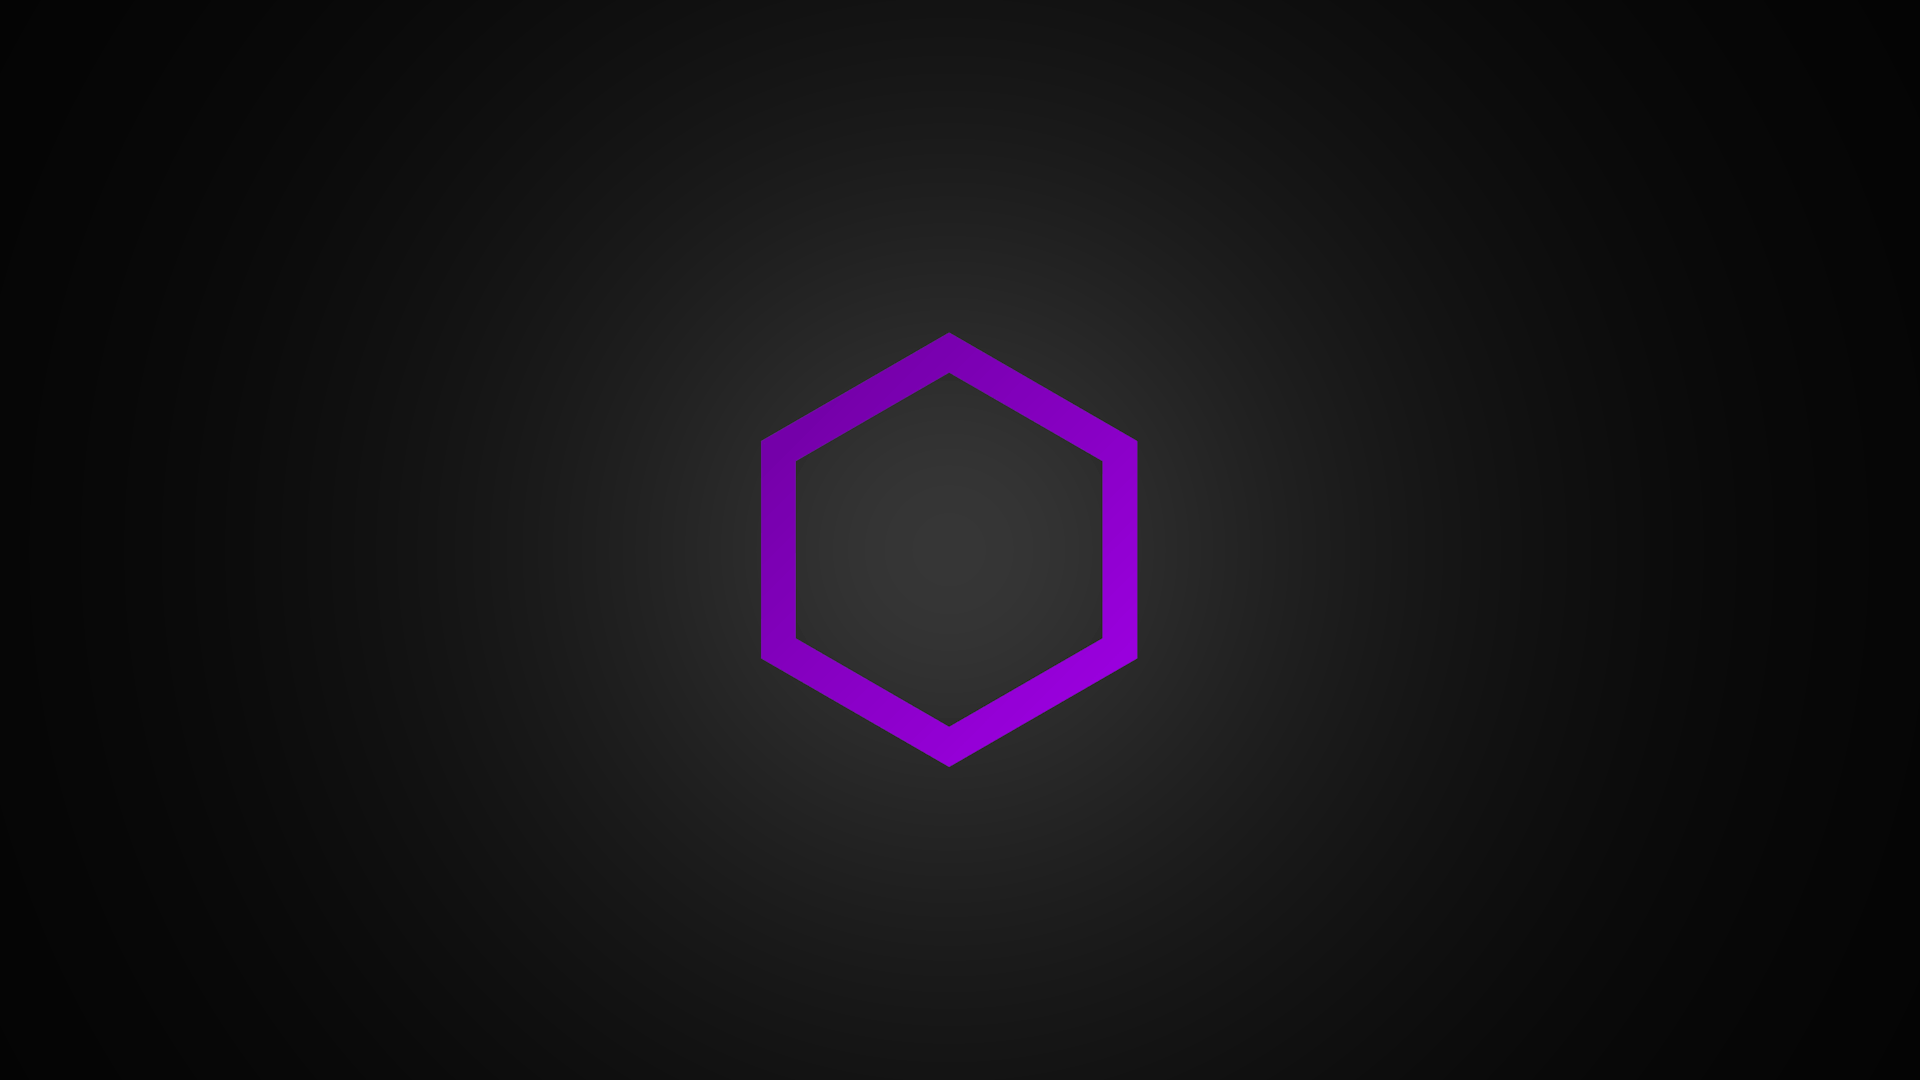 Hexagon Computer Logo - Wallpaper : minimalism, purple, text, logo, symmetry, hexagon ...